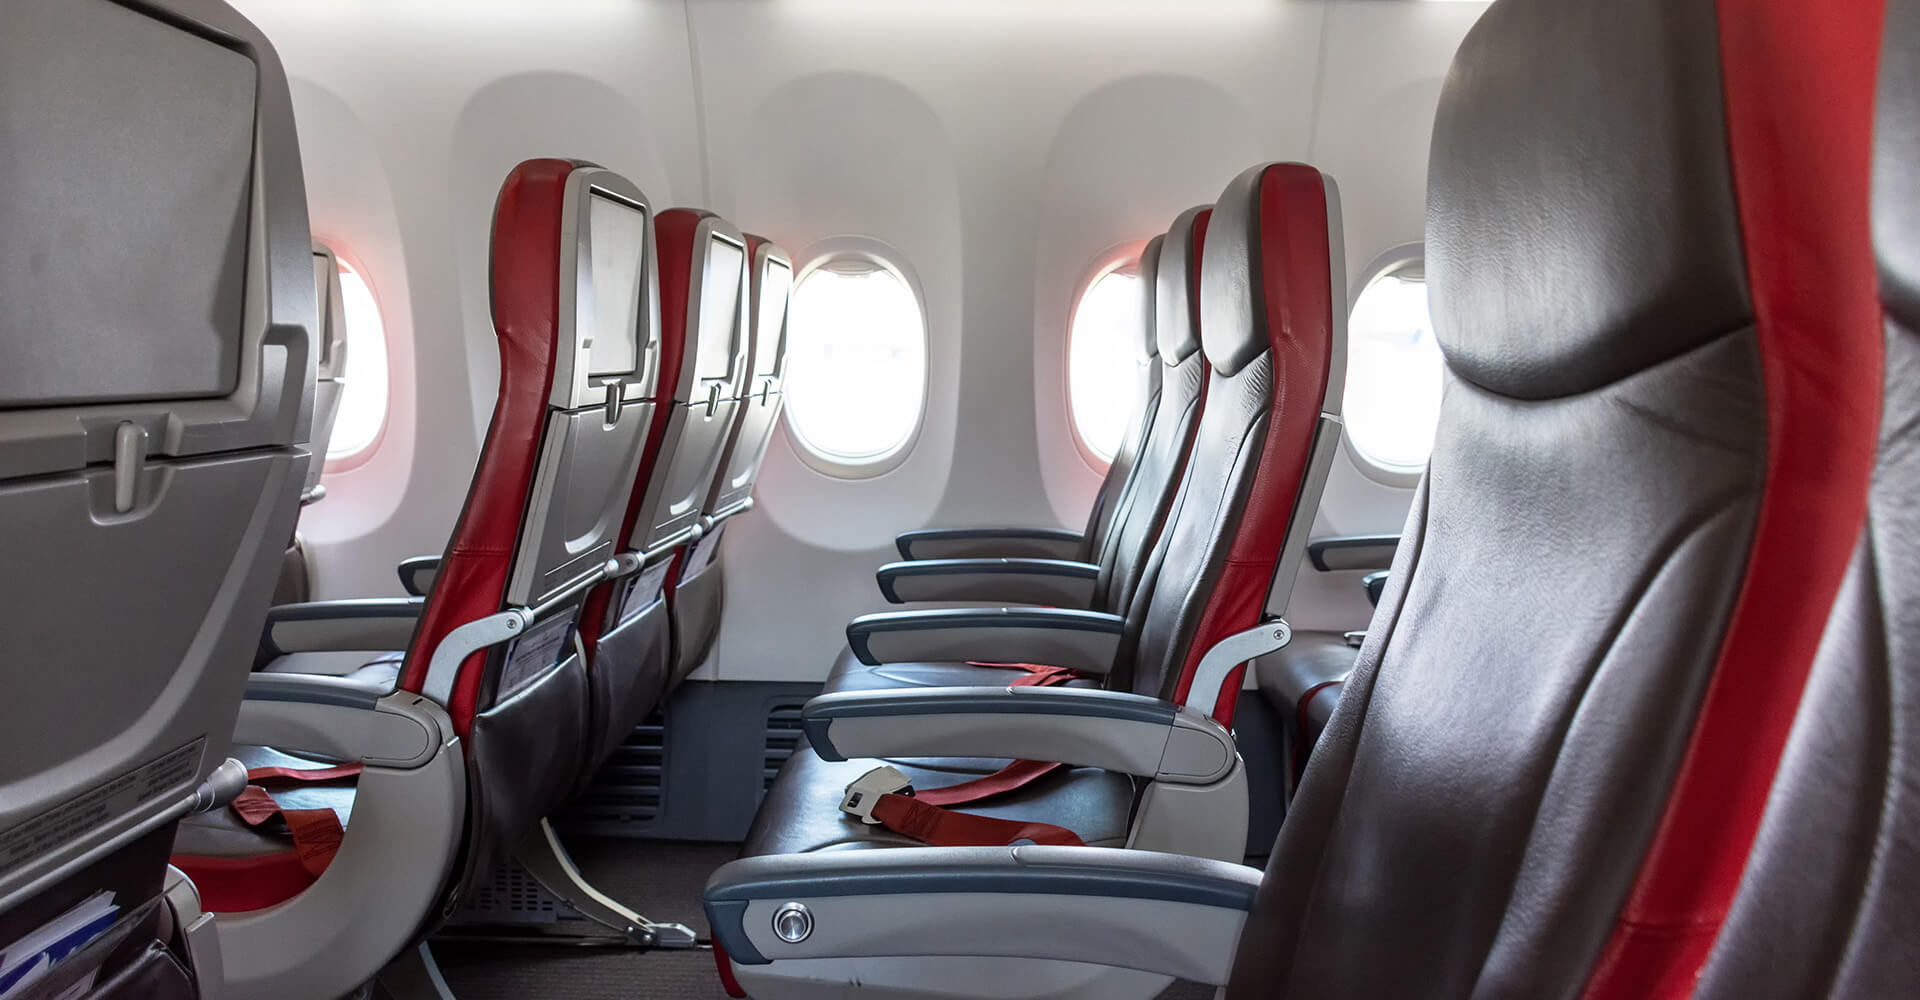 Airplane-Interior-Seats.jpg